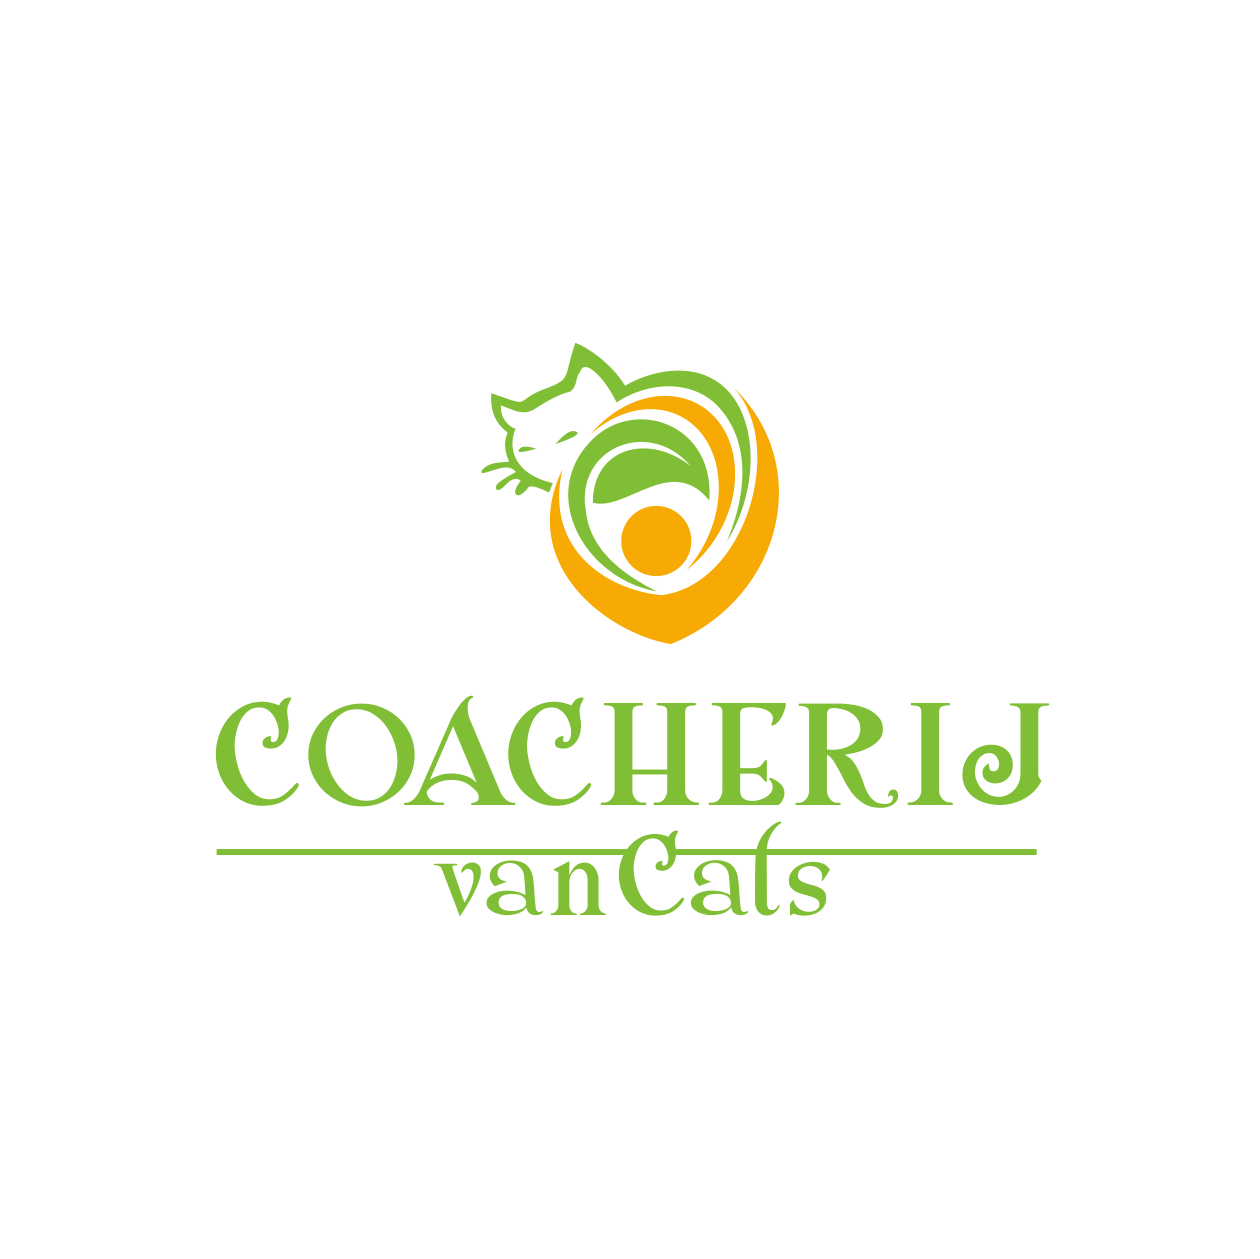 CC Company Logo - It Company Logo Design for Coacherij van Cats or CC or CvC by ...